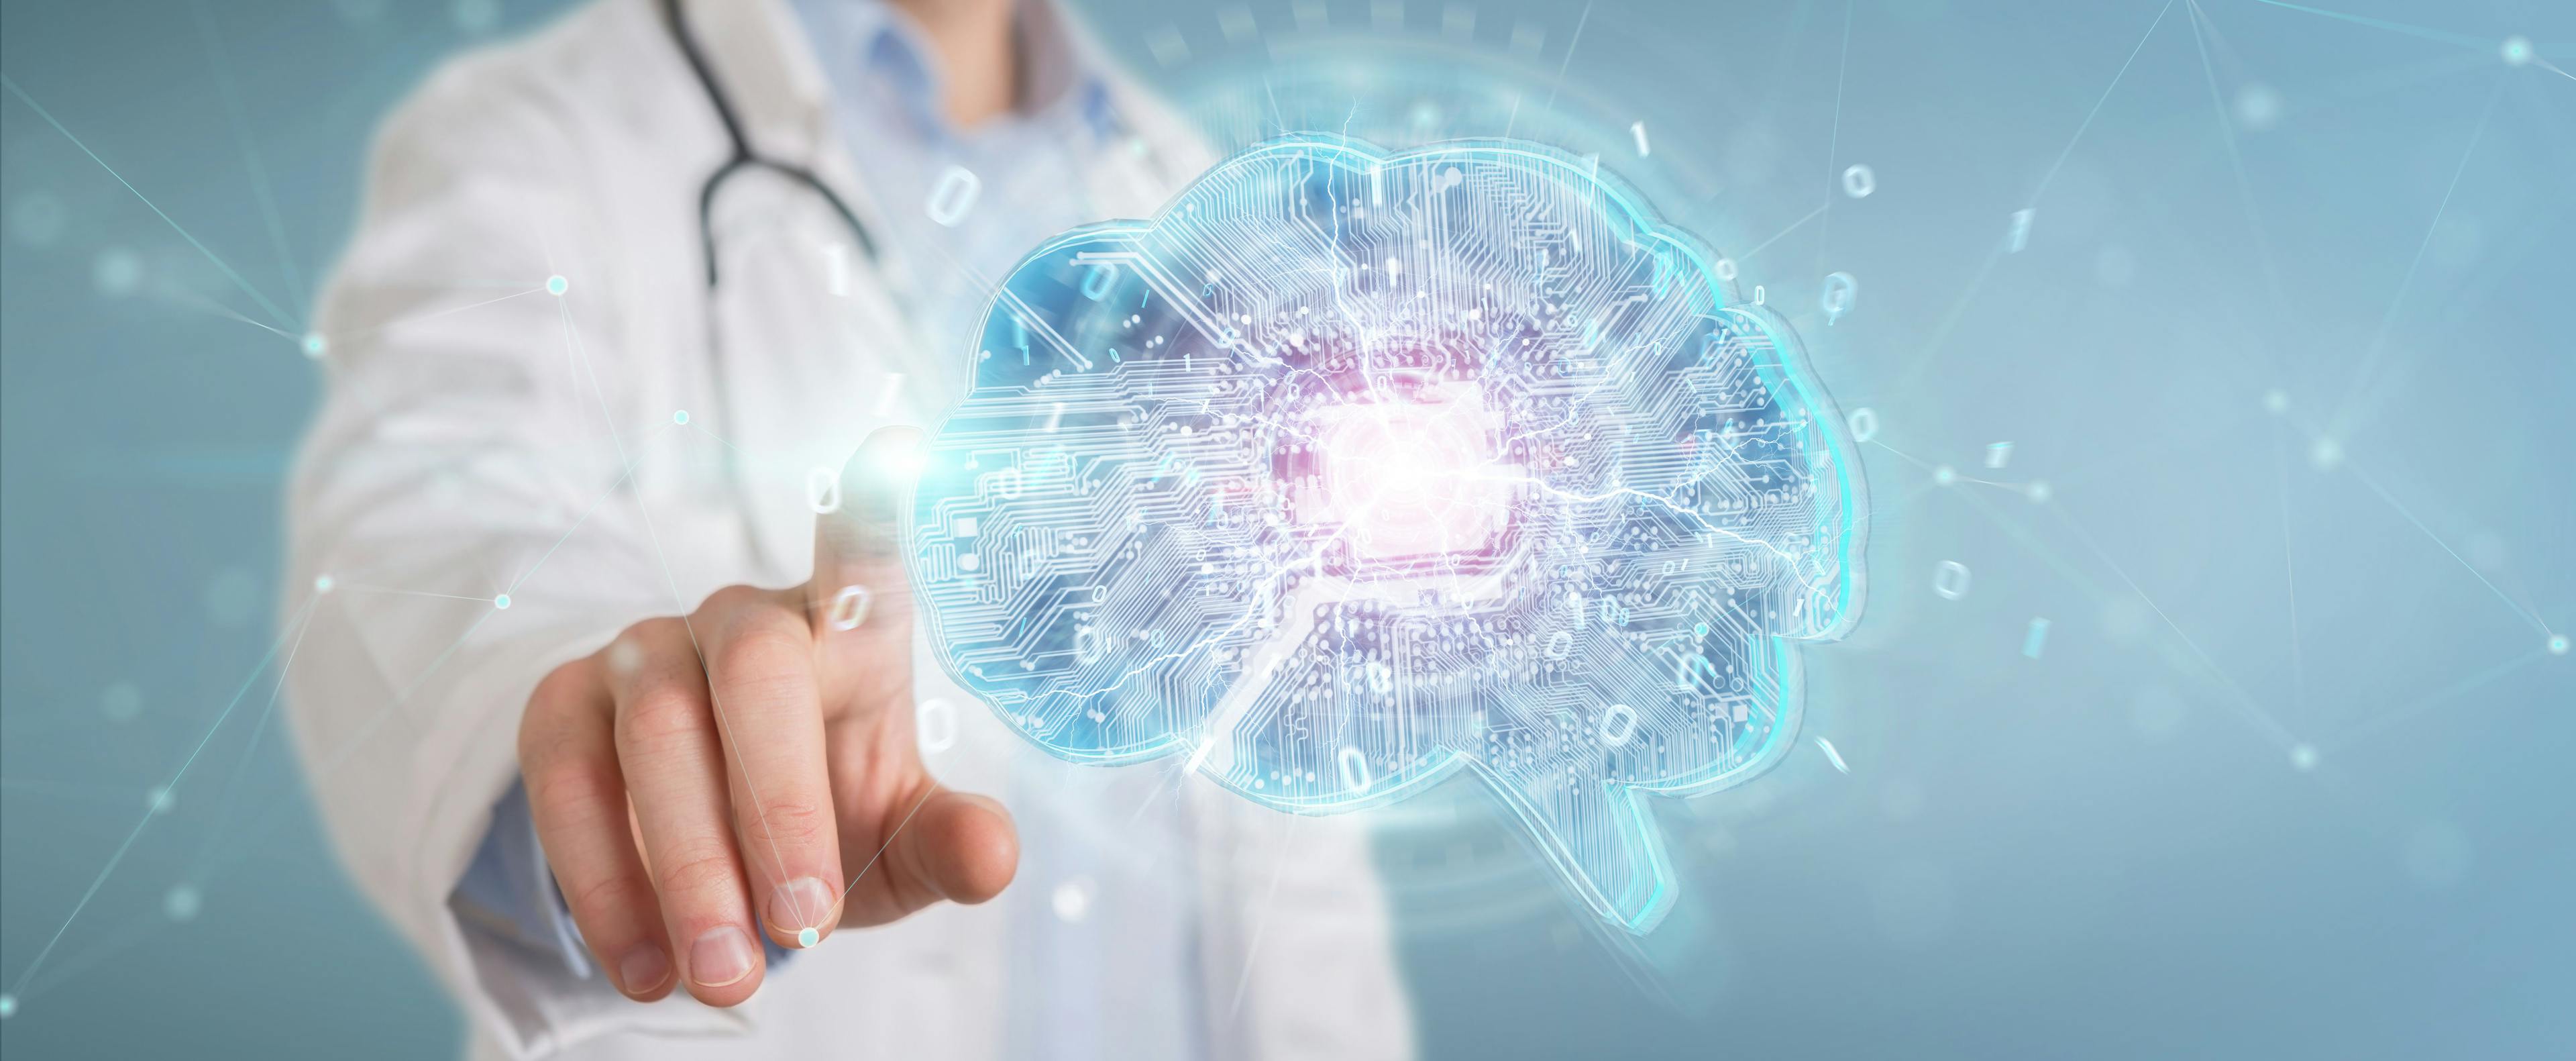 The time is now for healthcare to encourage AI adoption | Jeffrey Sullivan